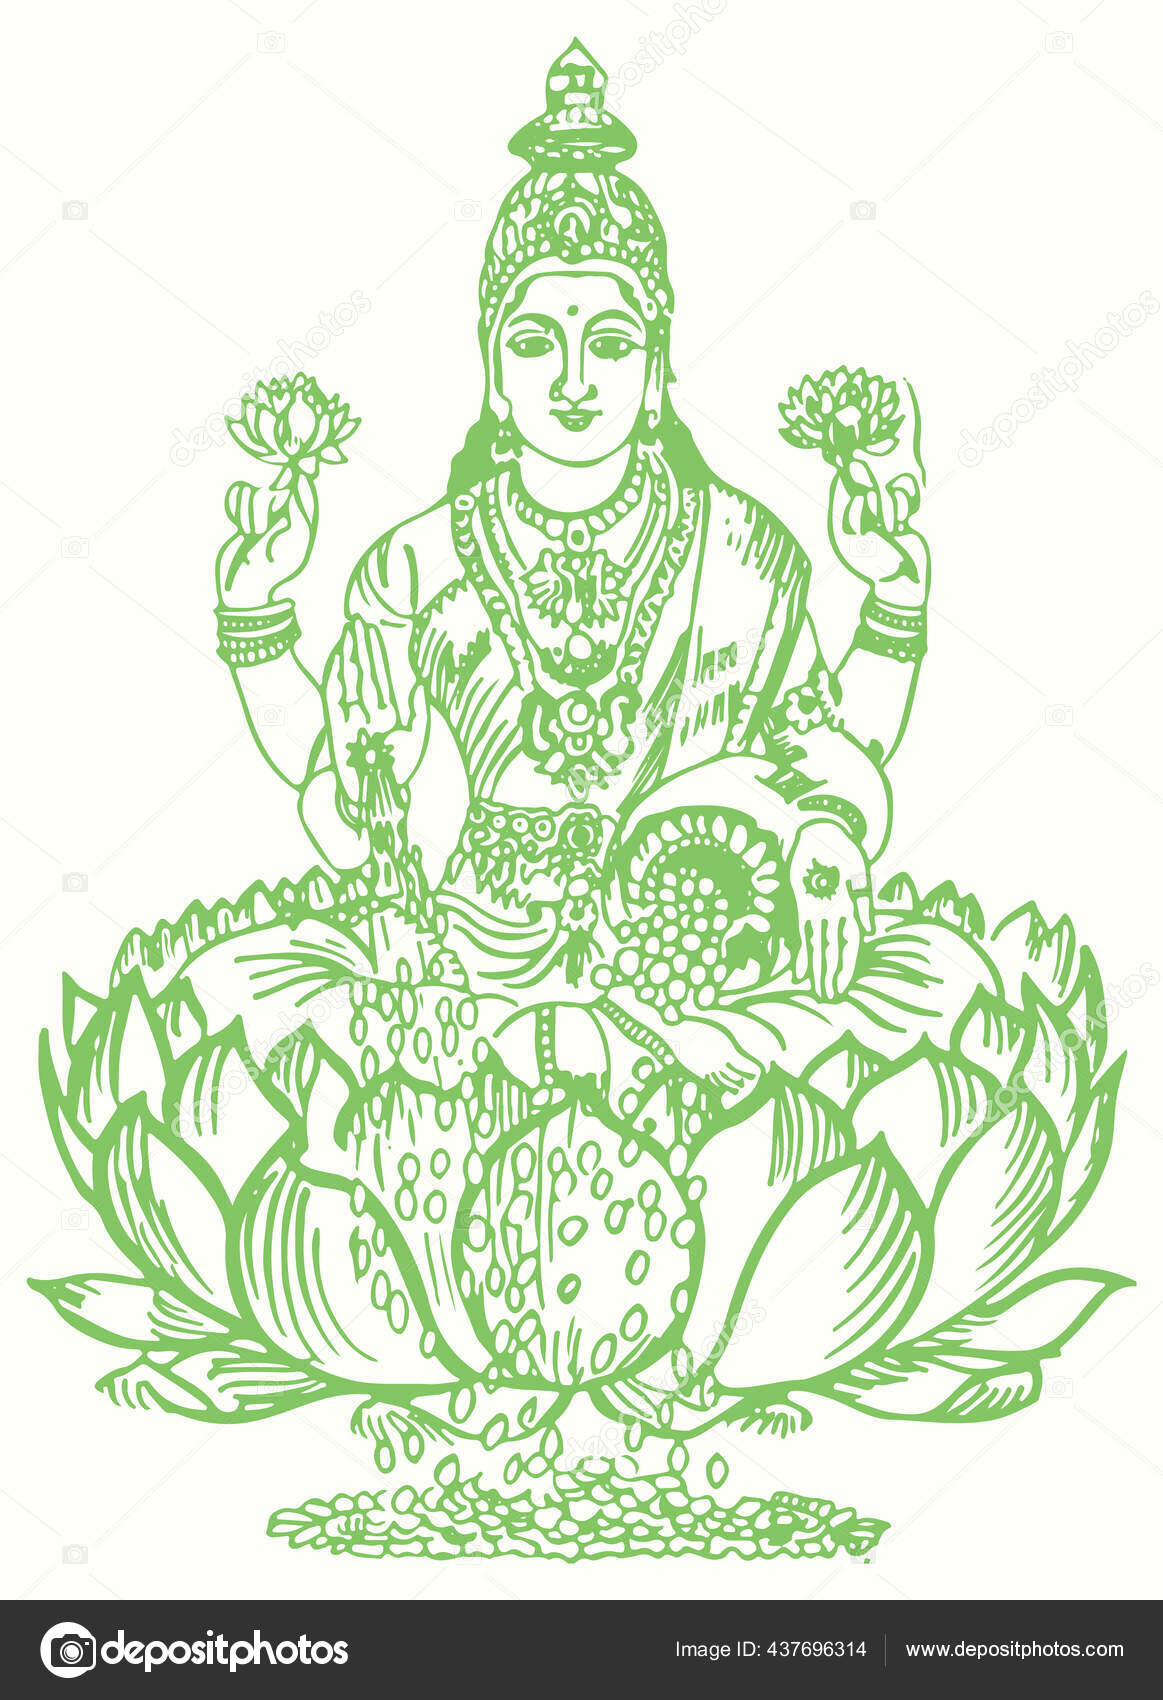 Lord vishnu  a hindu god vector illustration  CanStock